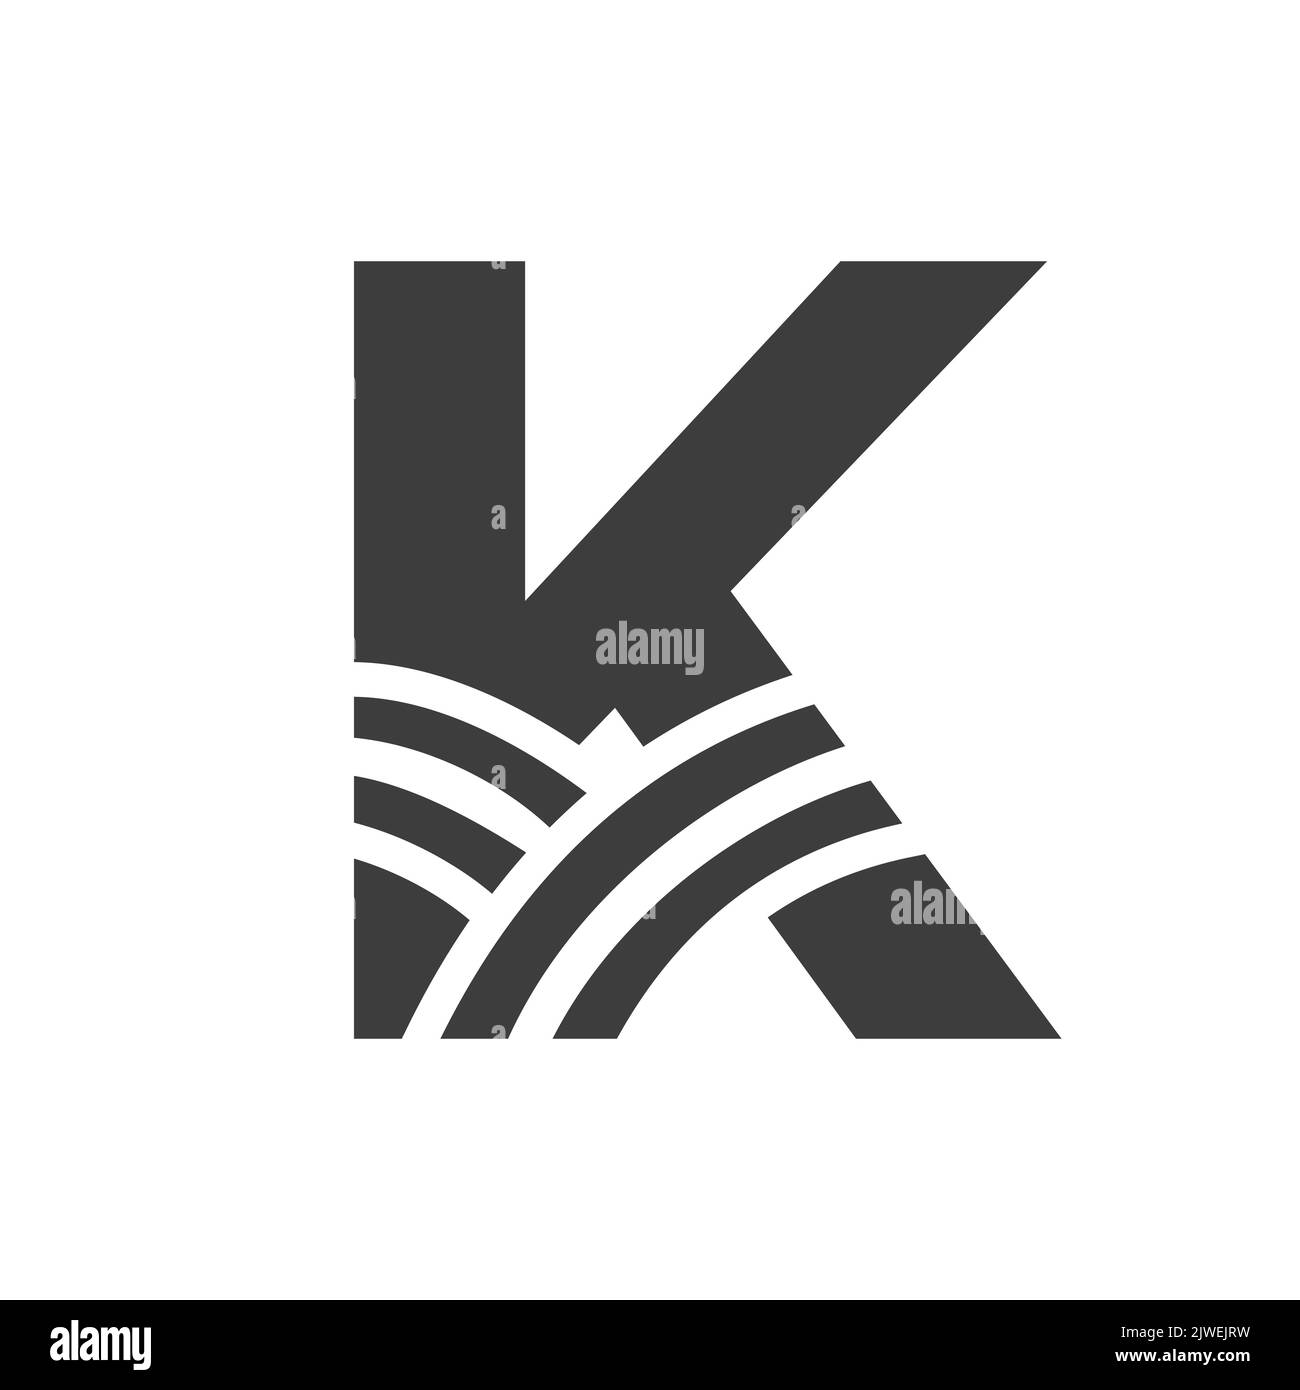 Agriculture Logo On Letter K Concept. Farm Logo Based on Alphabet for ...